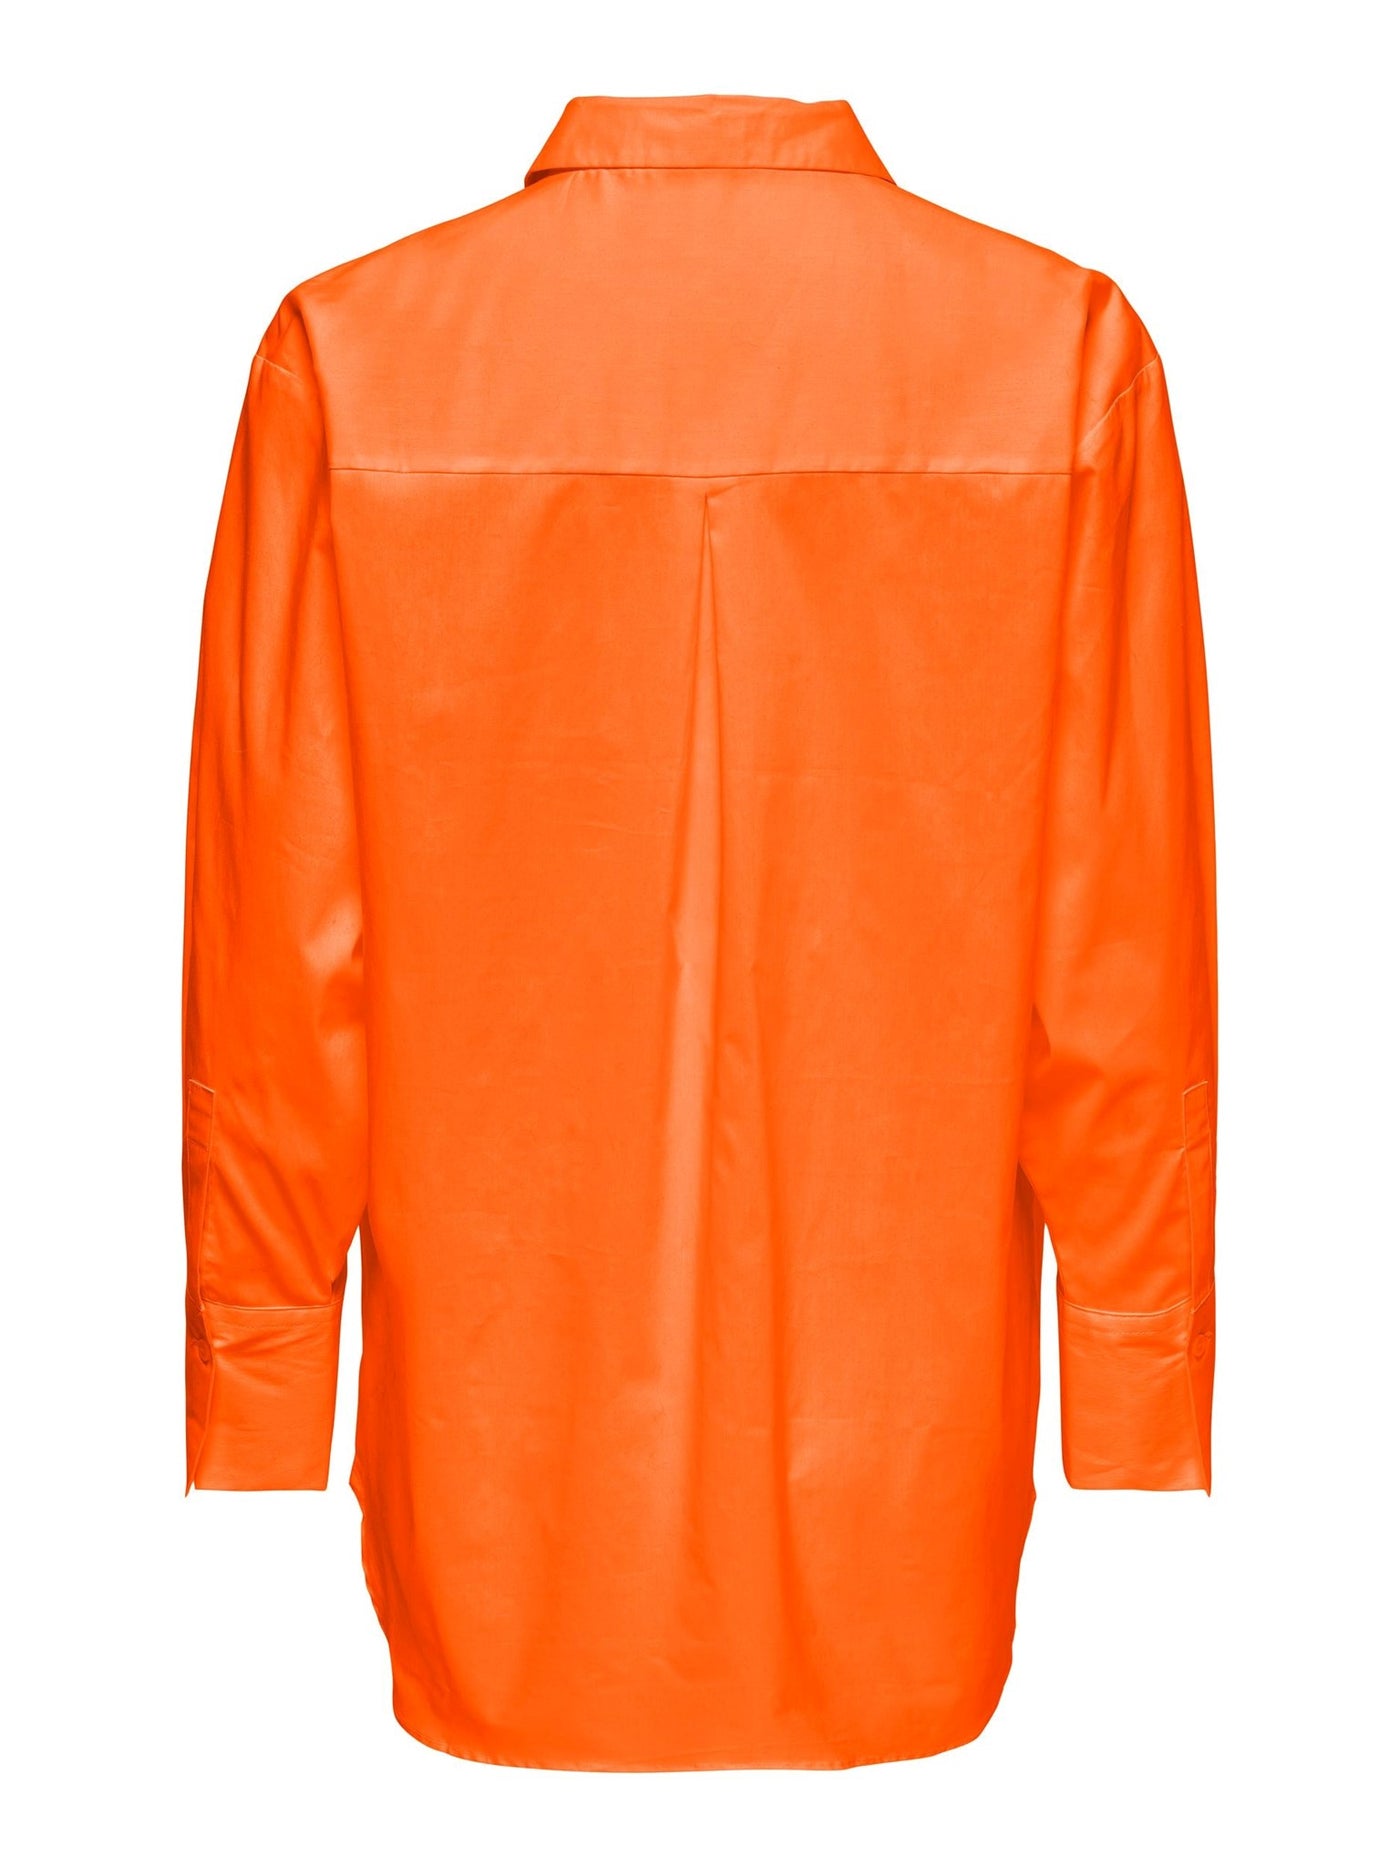 Mio Langer Hemd - Vibrant Orange - Jacqueline de Yong - Orange 3